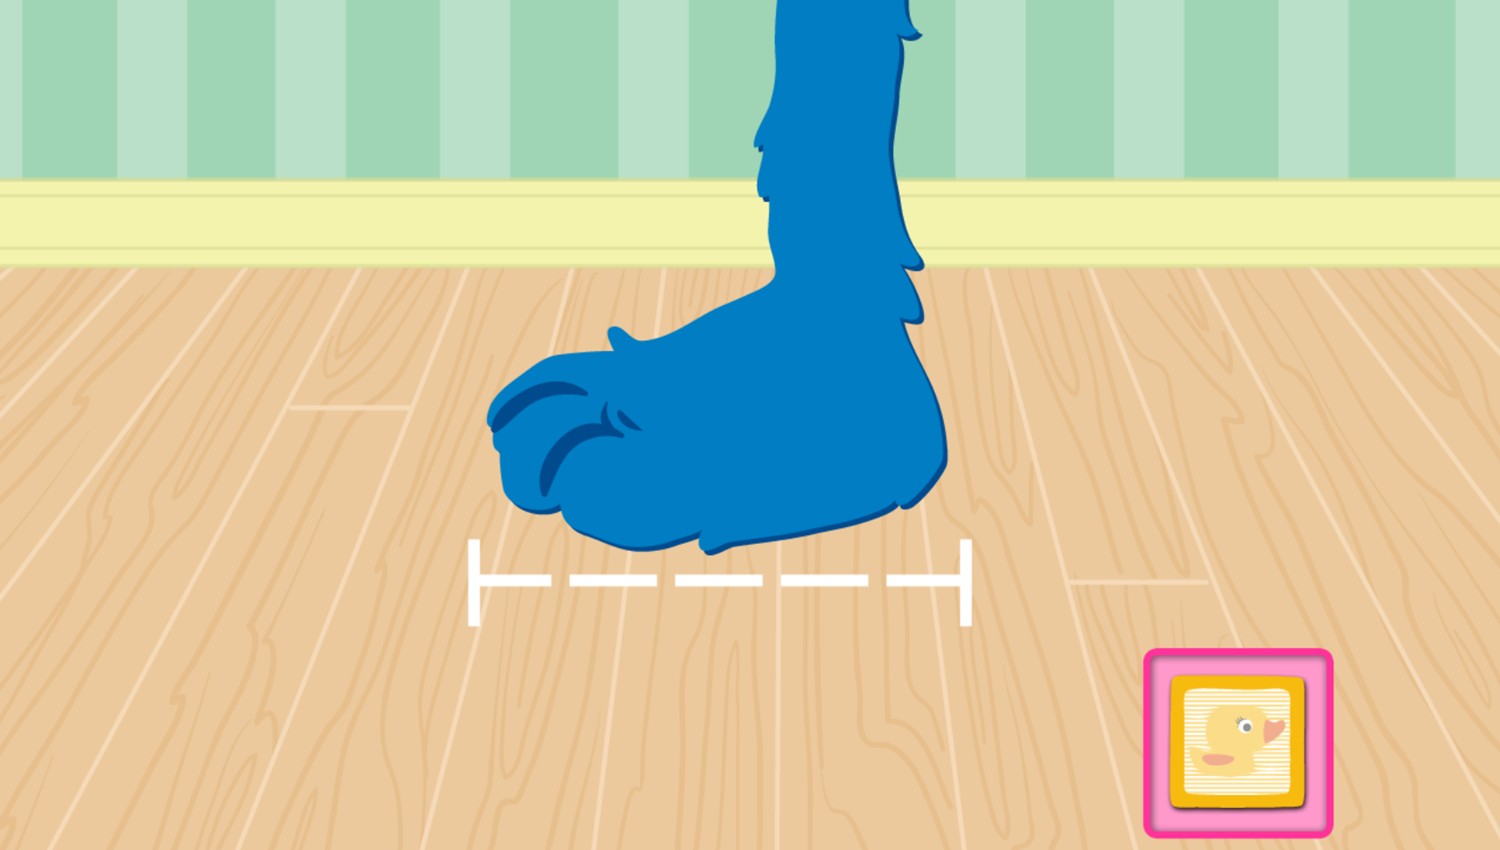 Sesame Street Measure That Foot Game Start Screenshot.